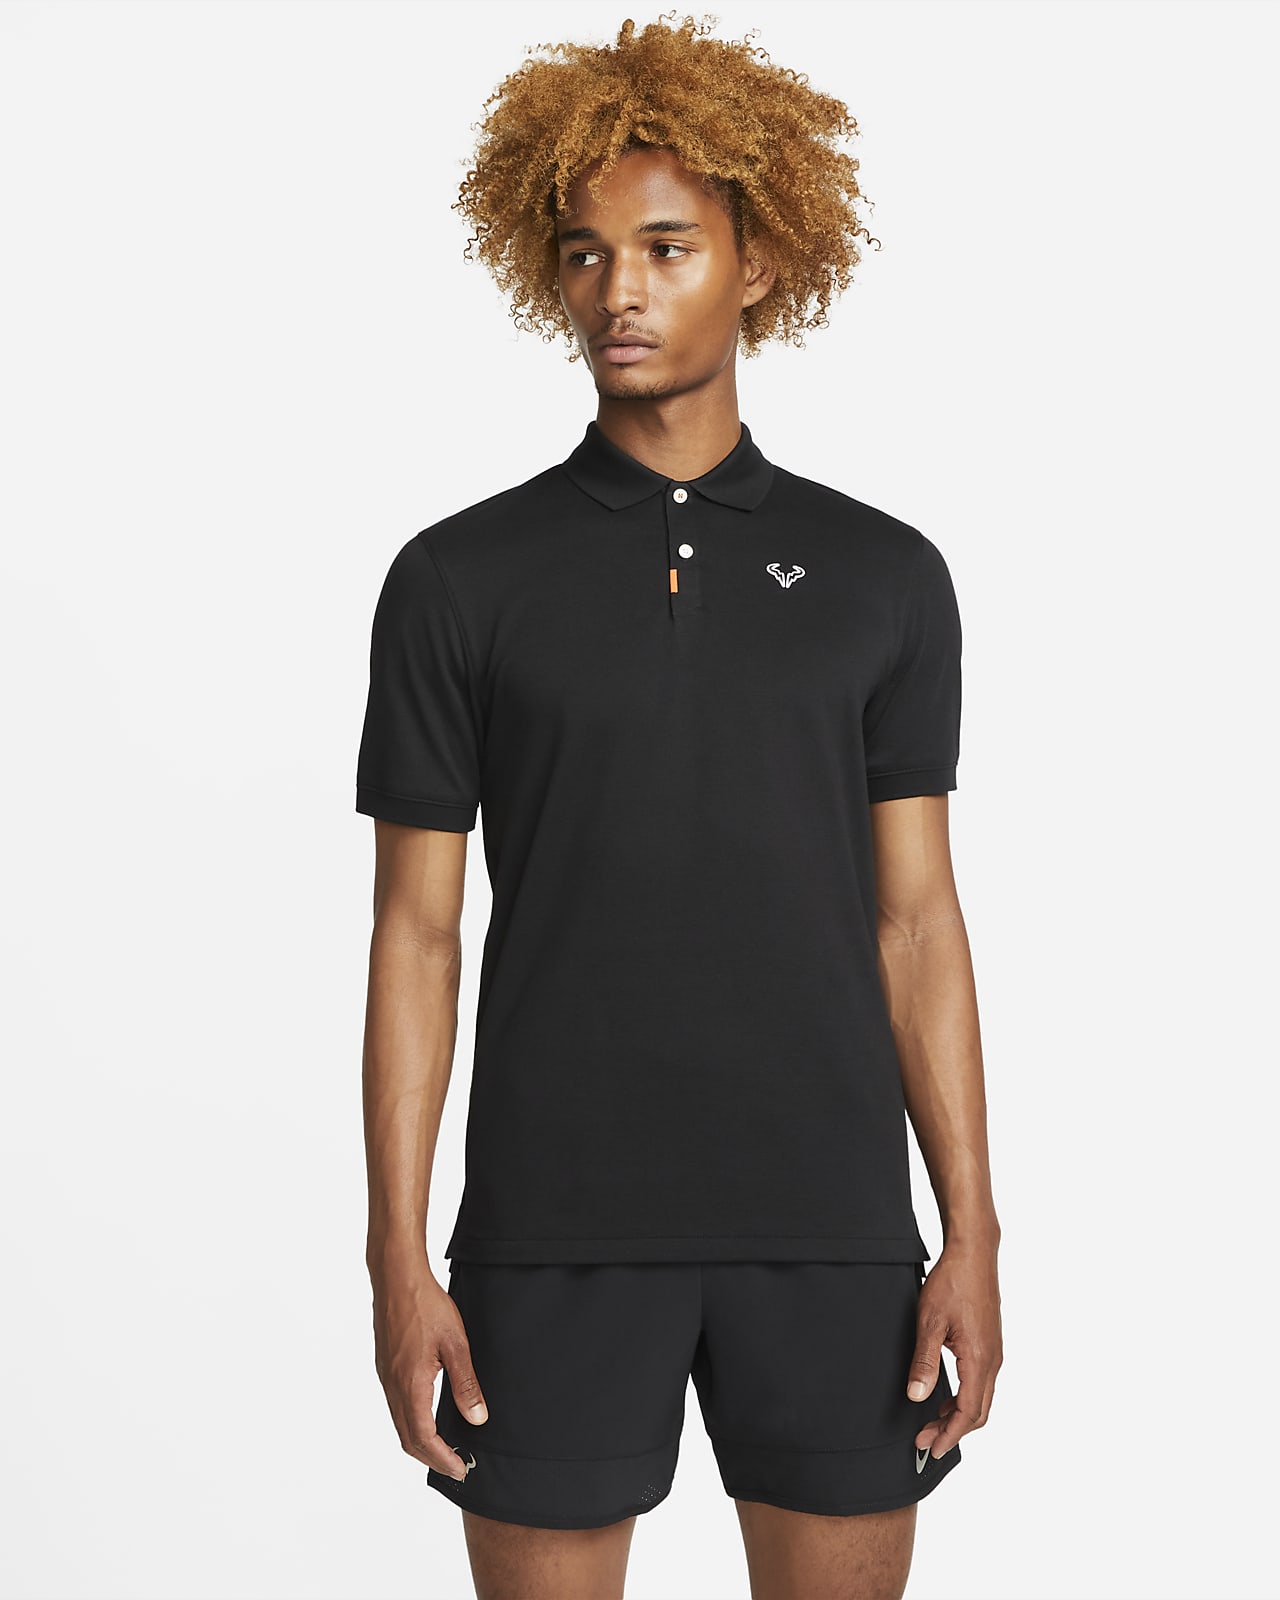 The Nike Polo Rafa Herren-Poloshirt in schmaler Passform